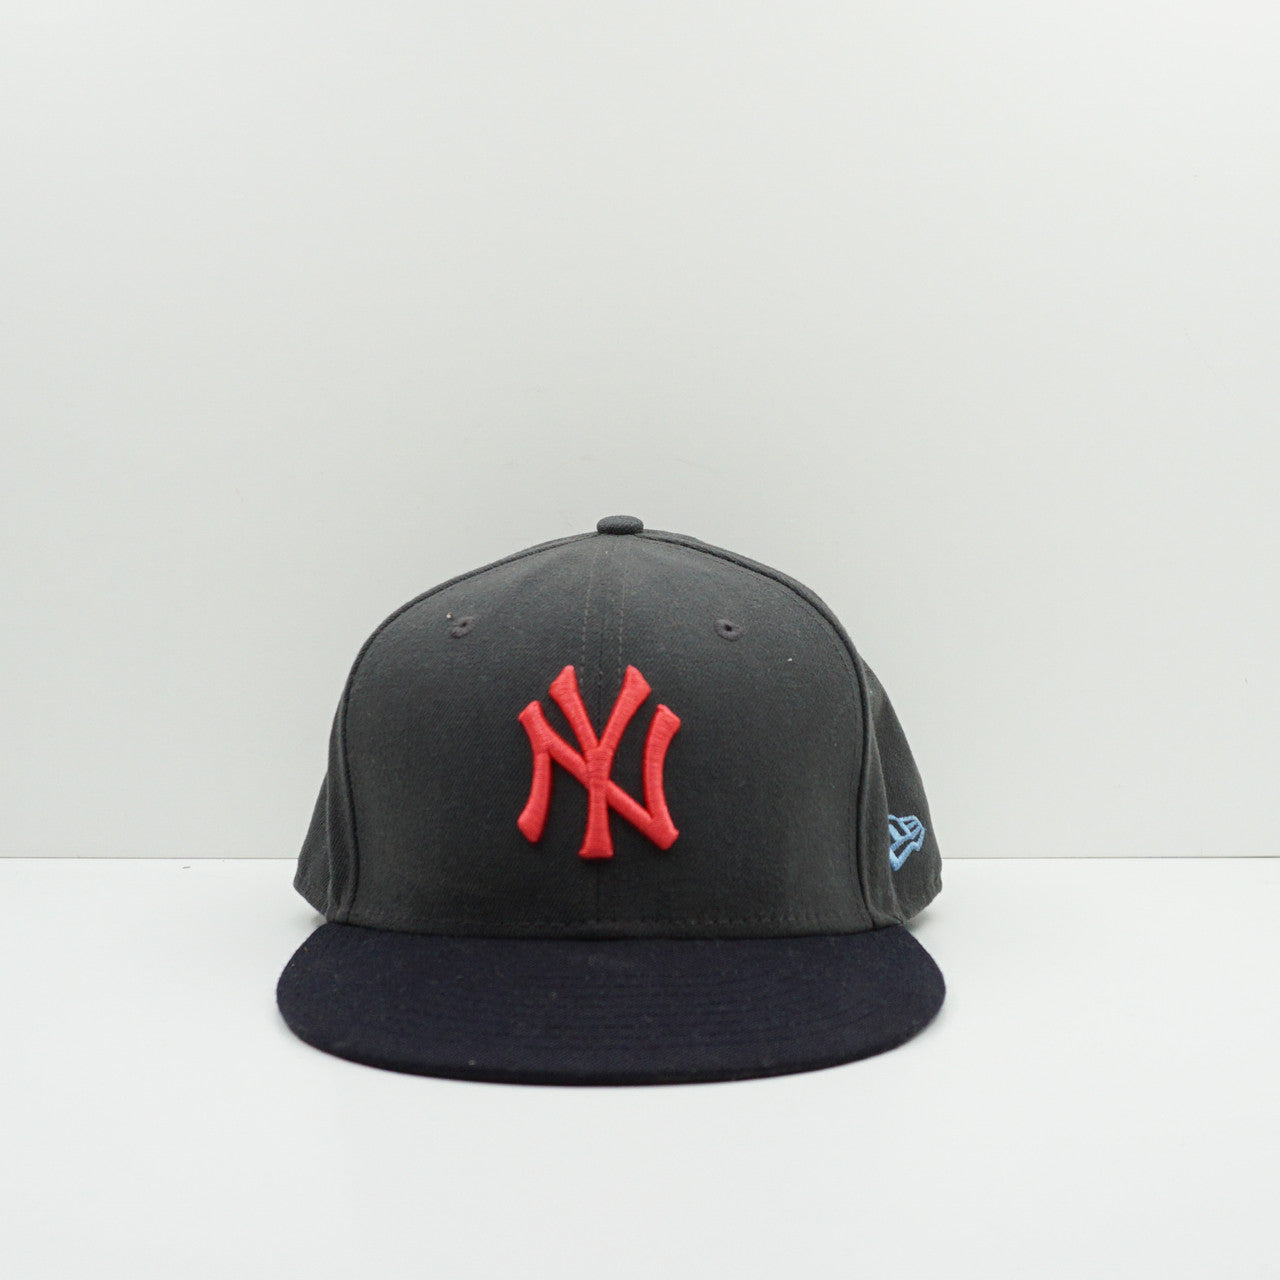 New Era New York Yankees Grey/Pink Fitted Cap